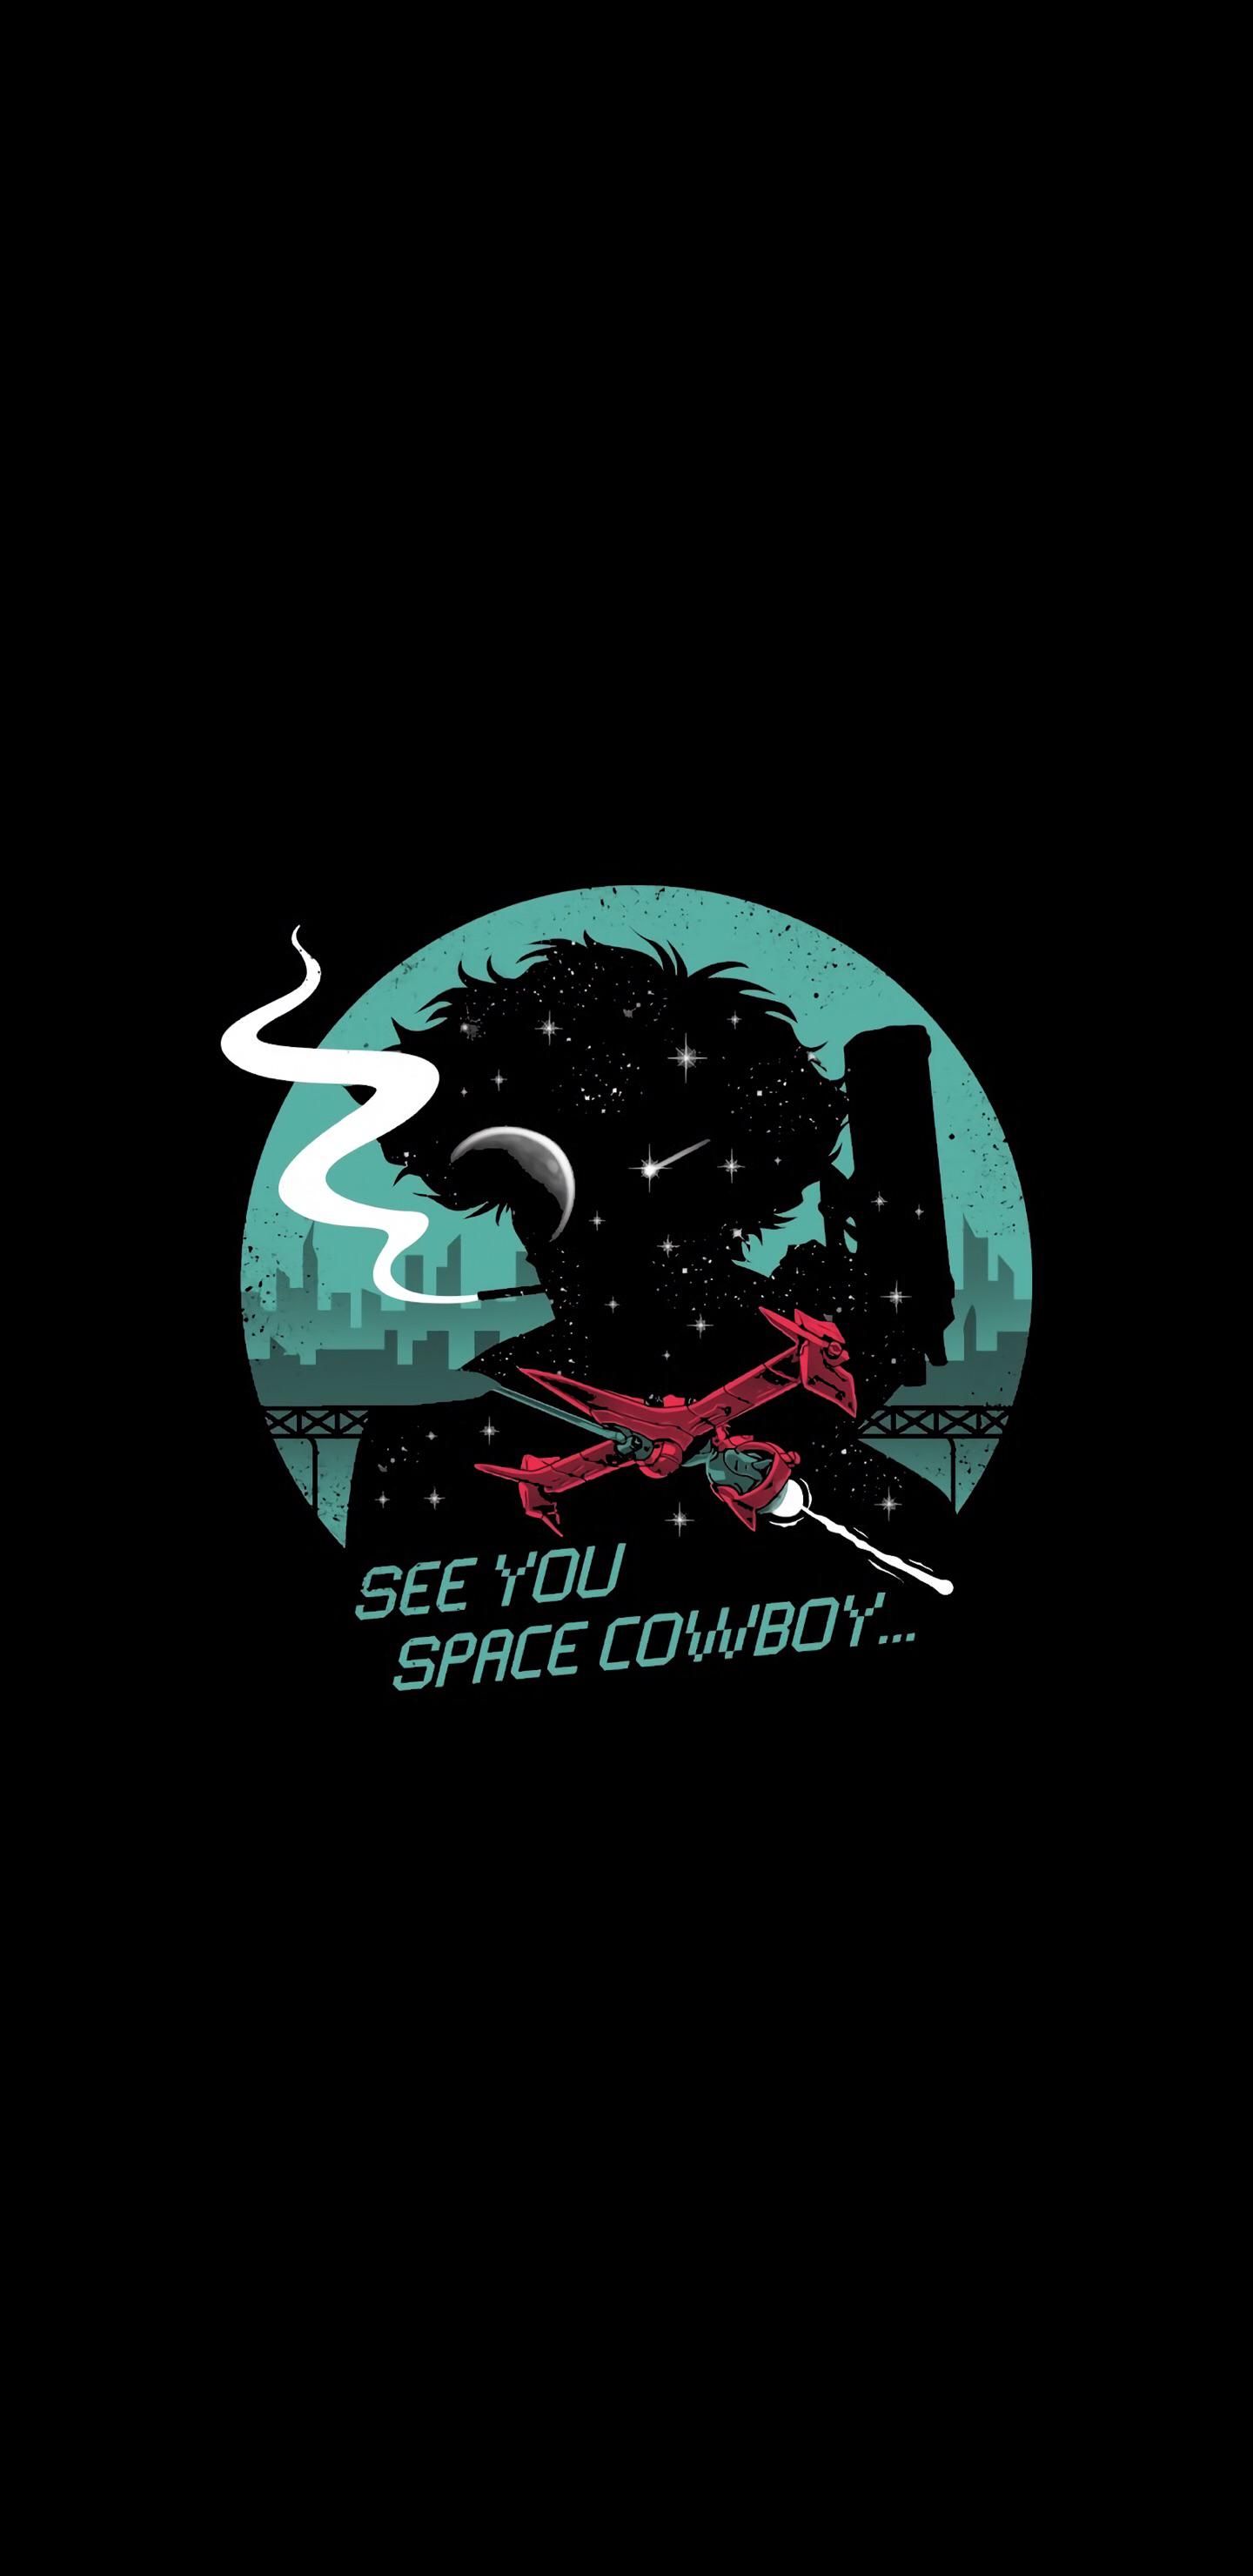 See you space cowboy. Cowboy bebop wallpaper, See you space cowboy, Anime wallpaper